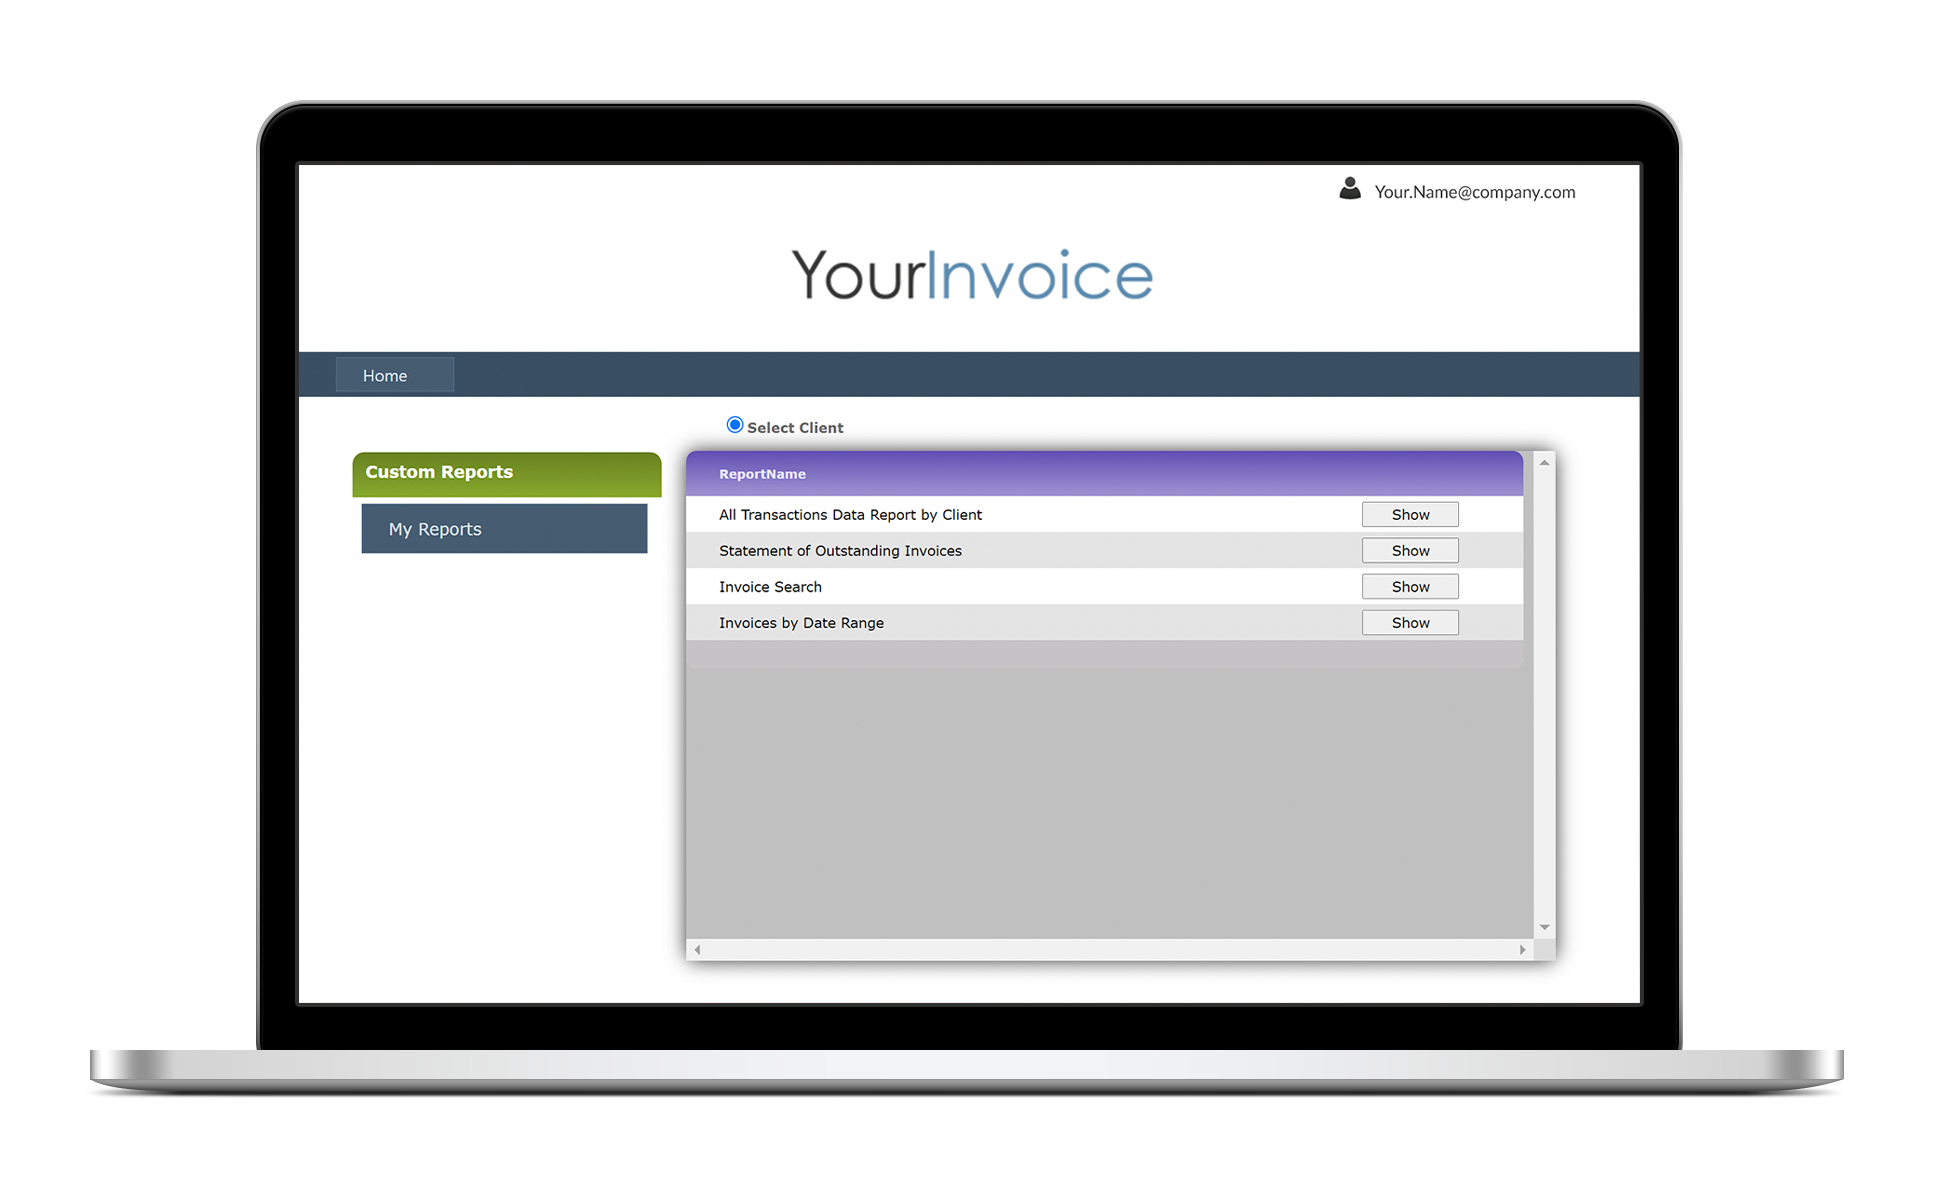 YourInvoice homepage